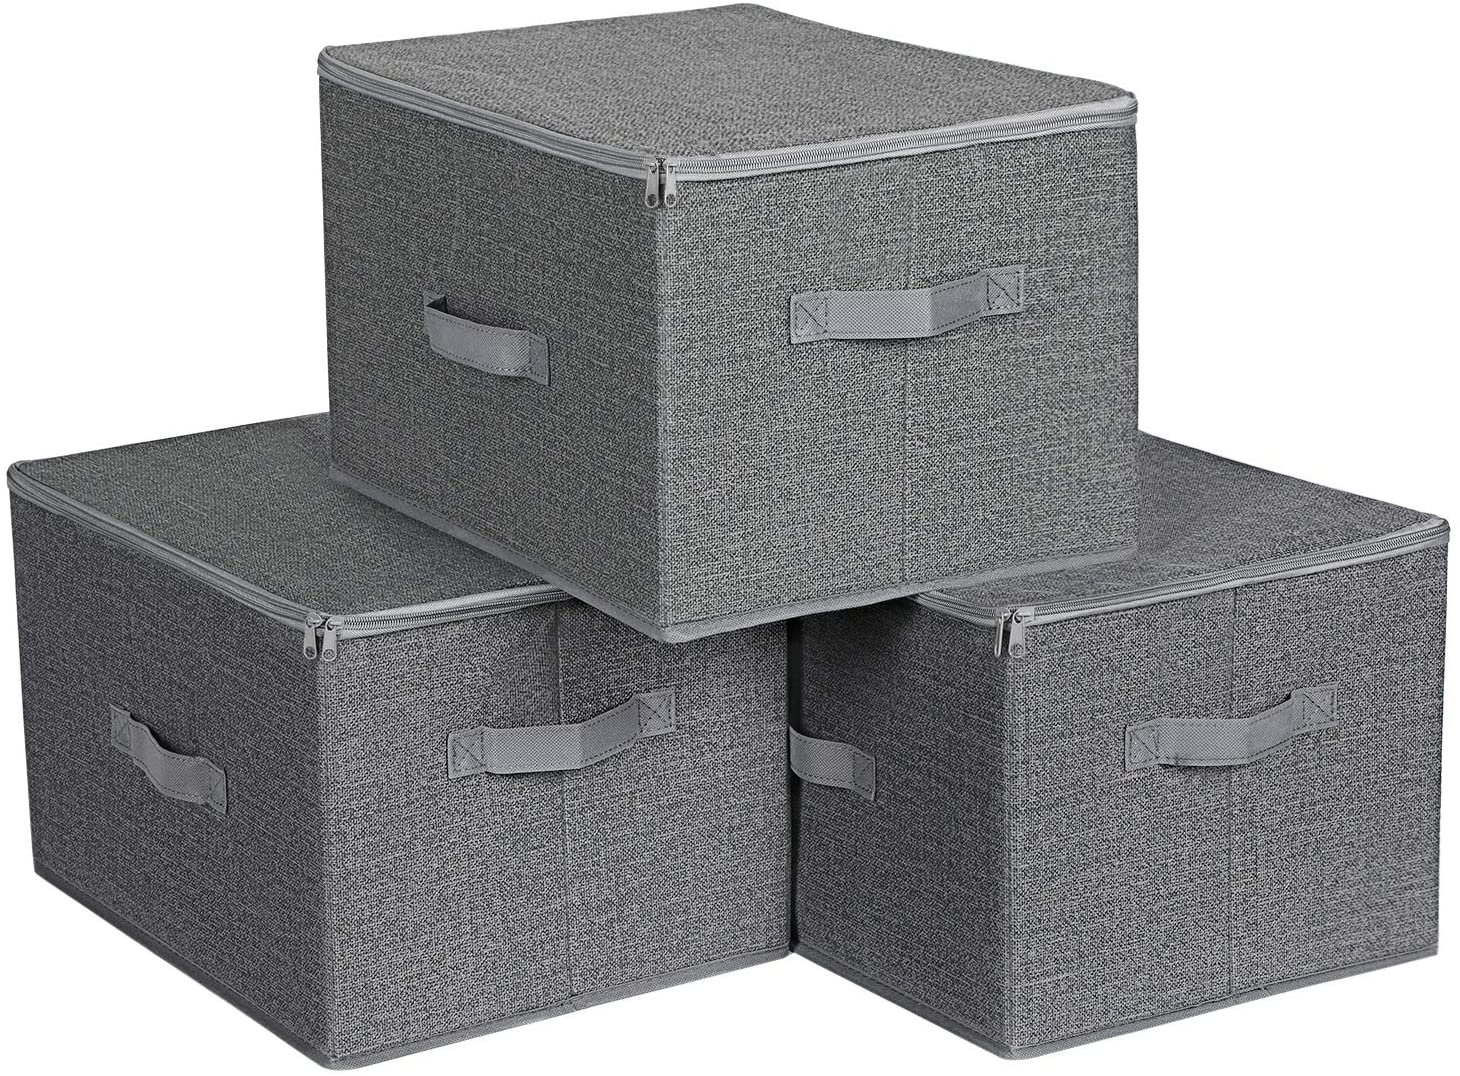 Nancy's Gilford Storage Boxes - Set Of 3 - Lid - Foldable - Fabric - Handles - Gray - 40 x 30 x 25 cm